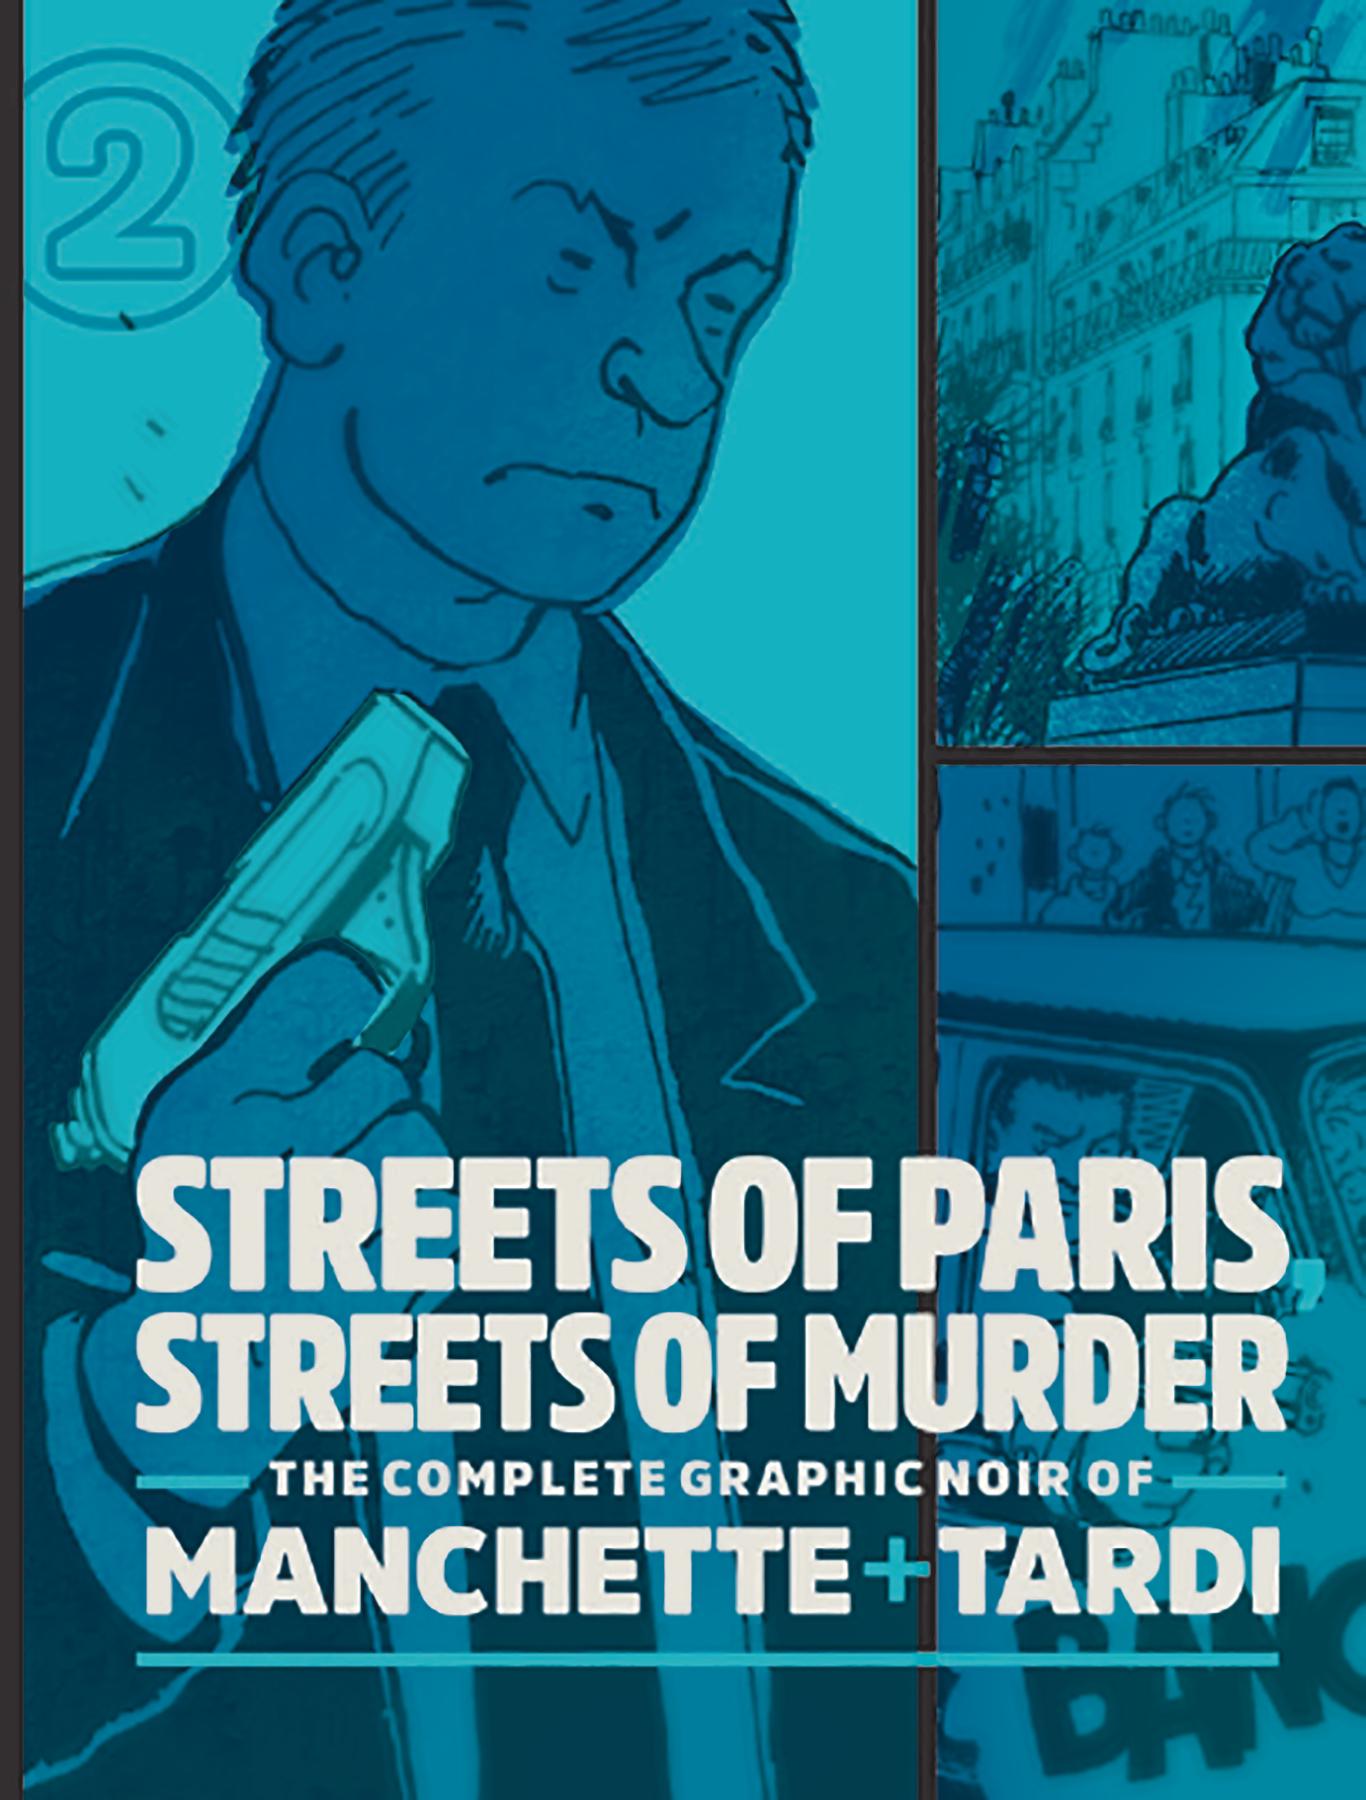 Streets Of Paris, Streets Of Murder: The Complete Graphic Noir Of Manchette & Tardi vol 2 h/c